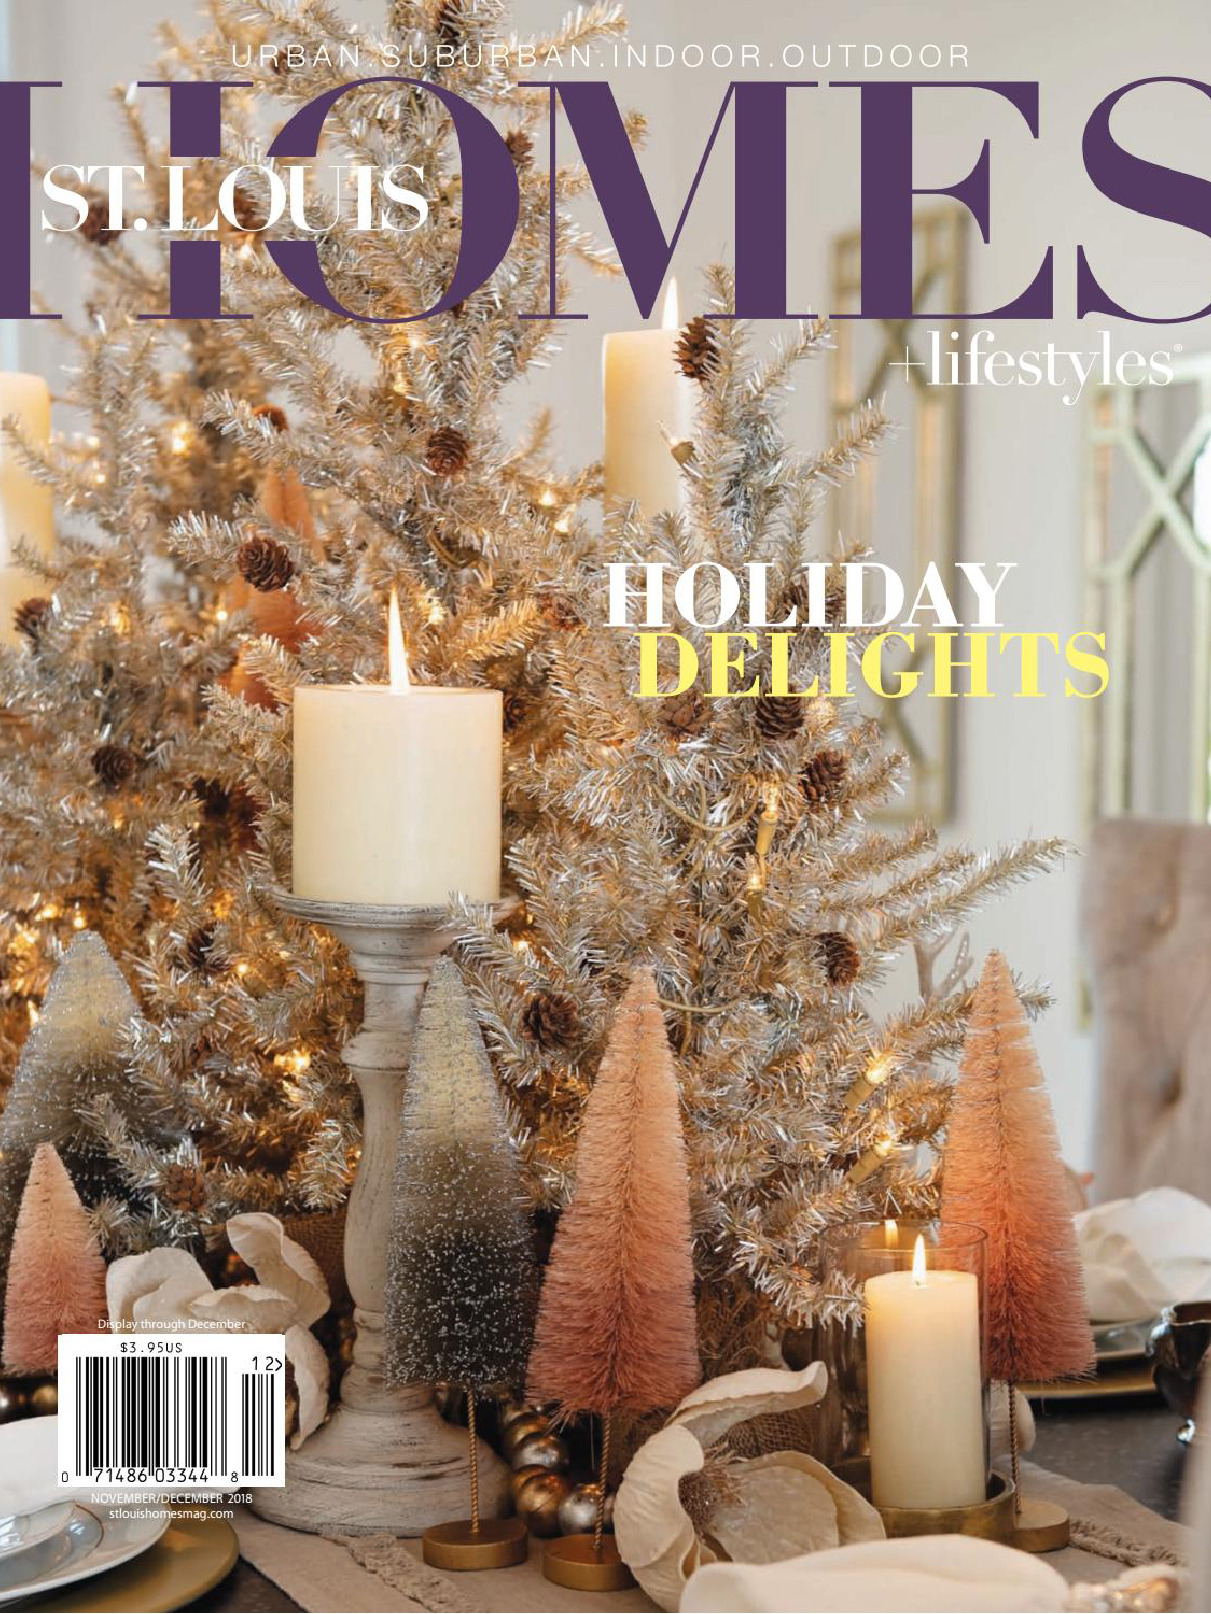 《St. Louis Homes & Lifestyles》美国版时尚家居生活杂志2018年11月号